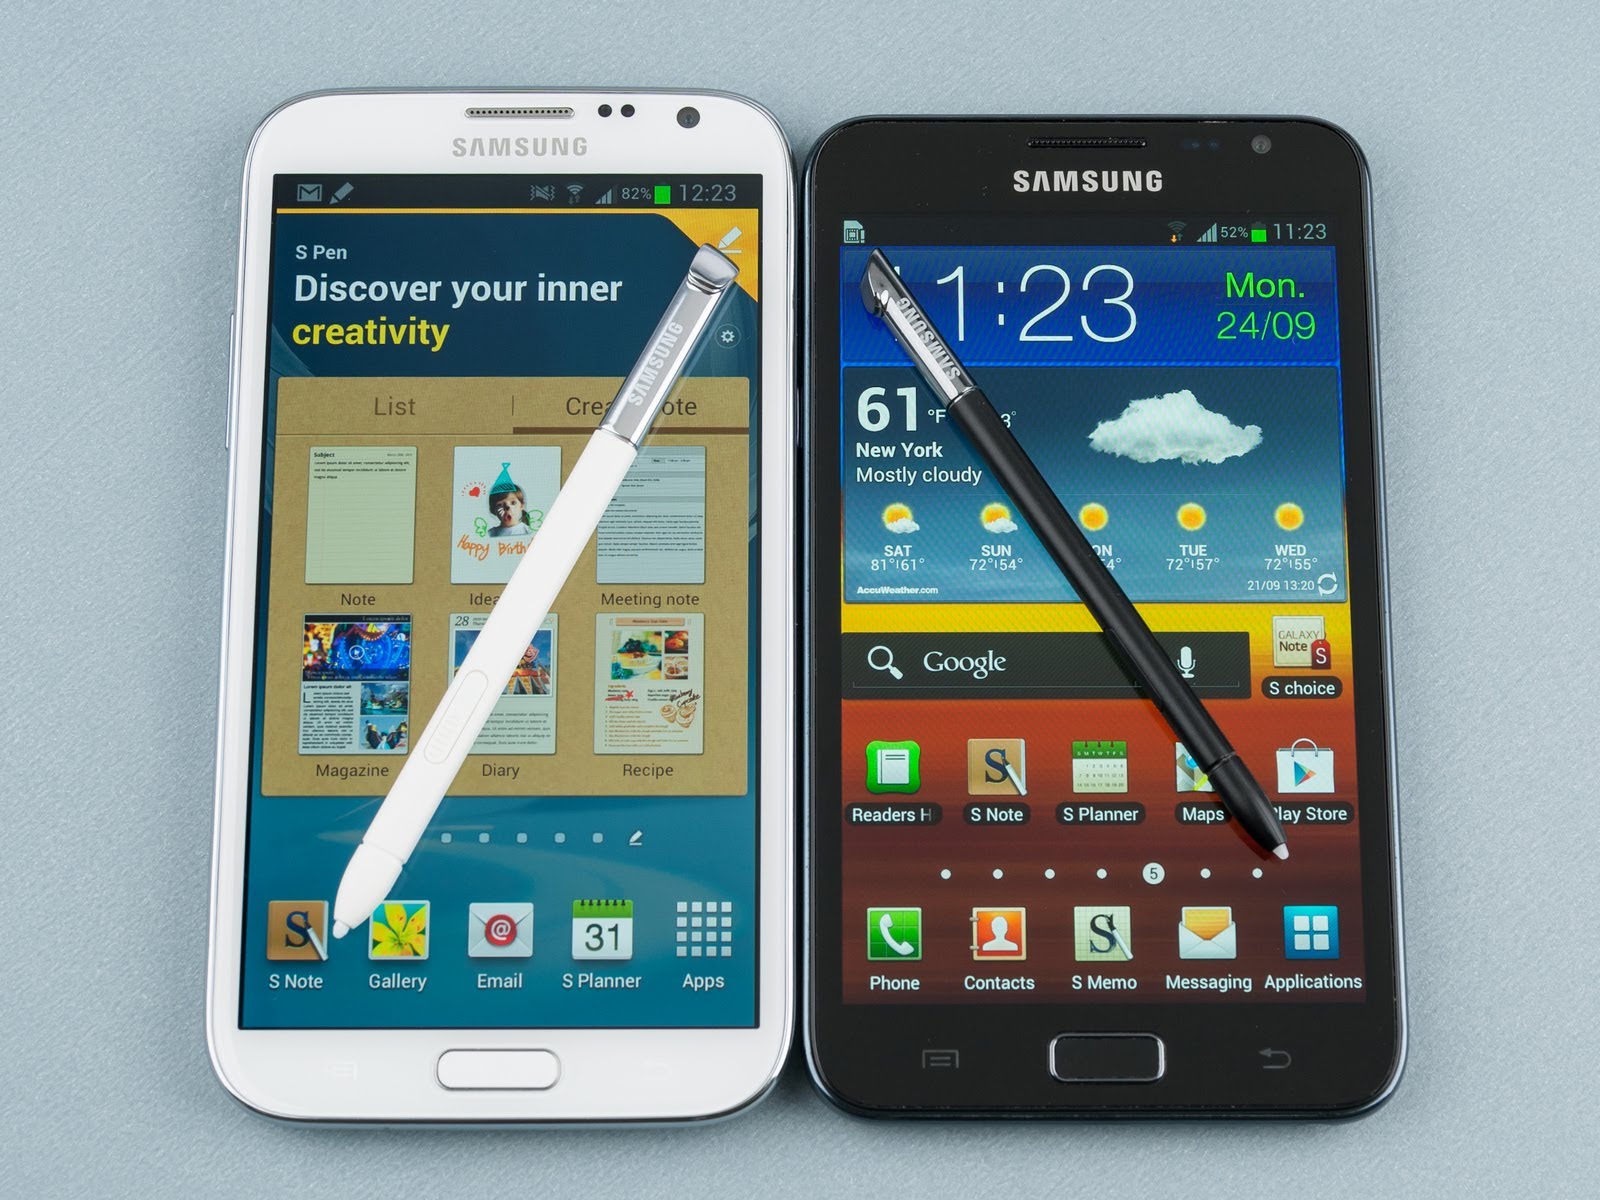 Samsung Galaxy Note II vs Samsung Galaxy Note - YouTube